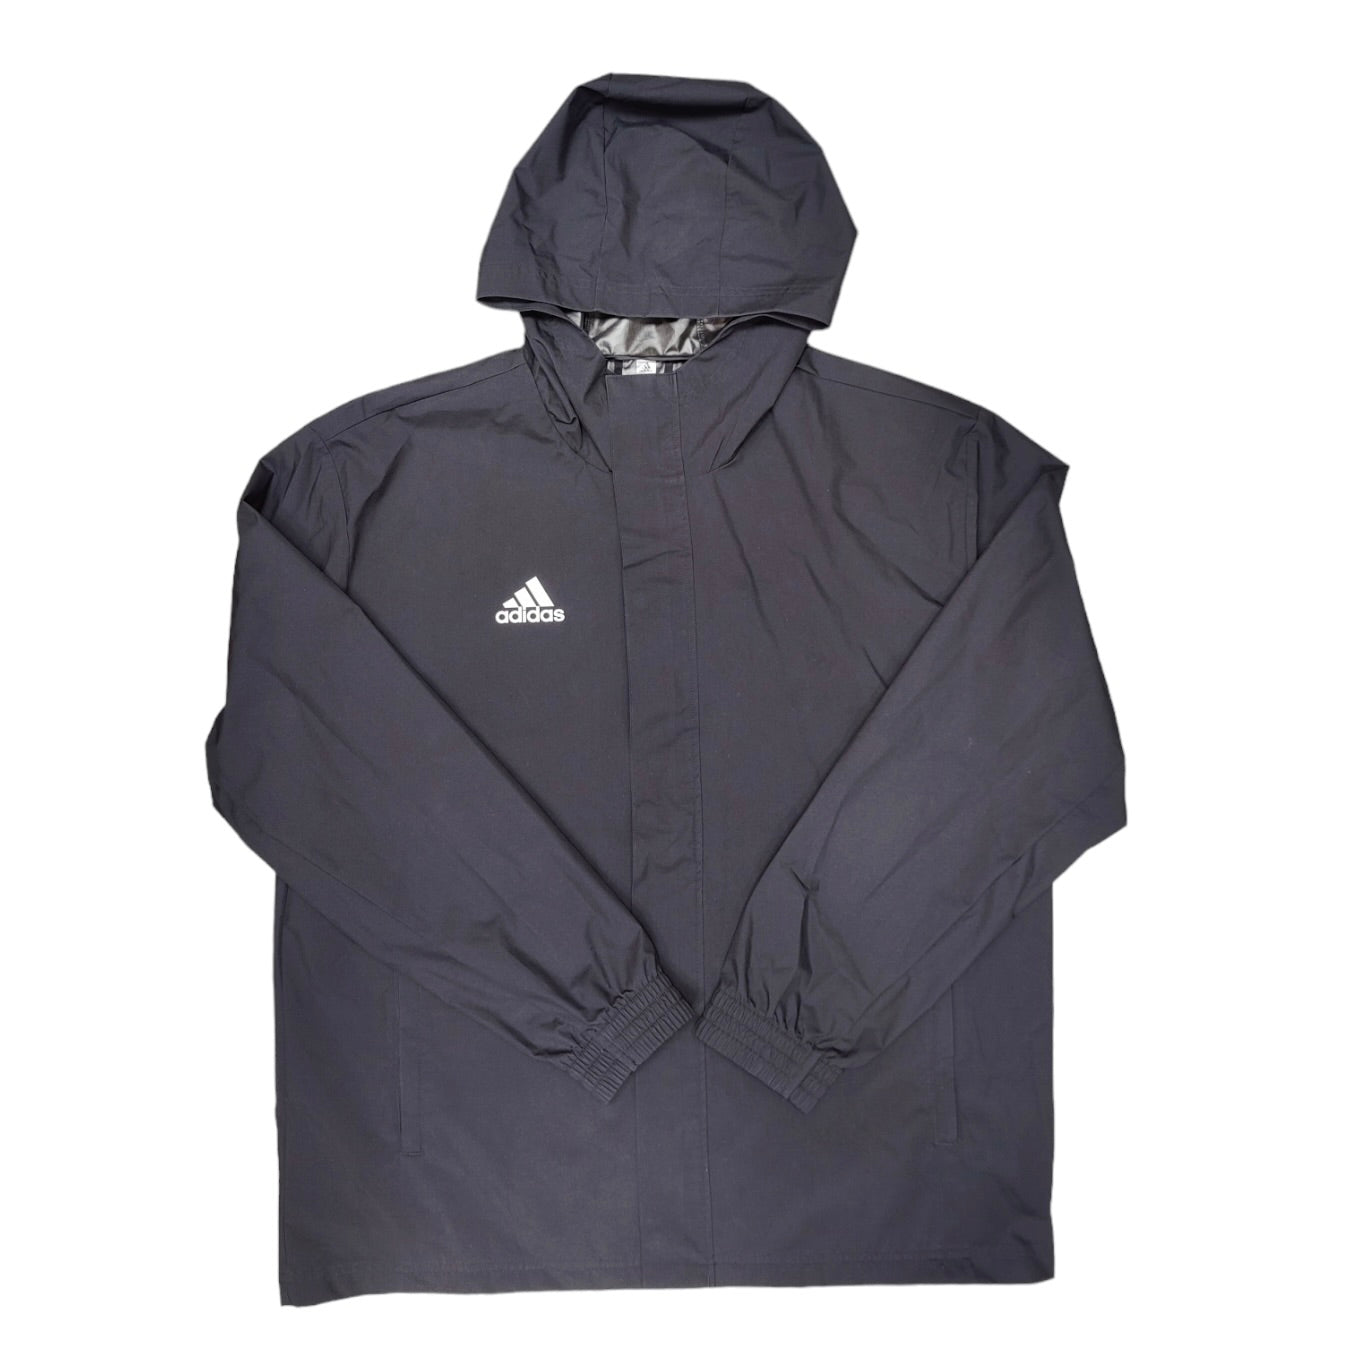 Adidas All Weather Black Jacket